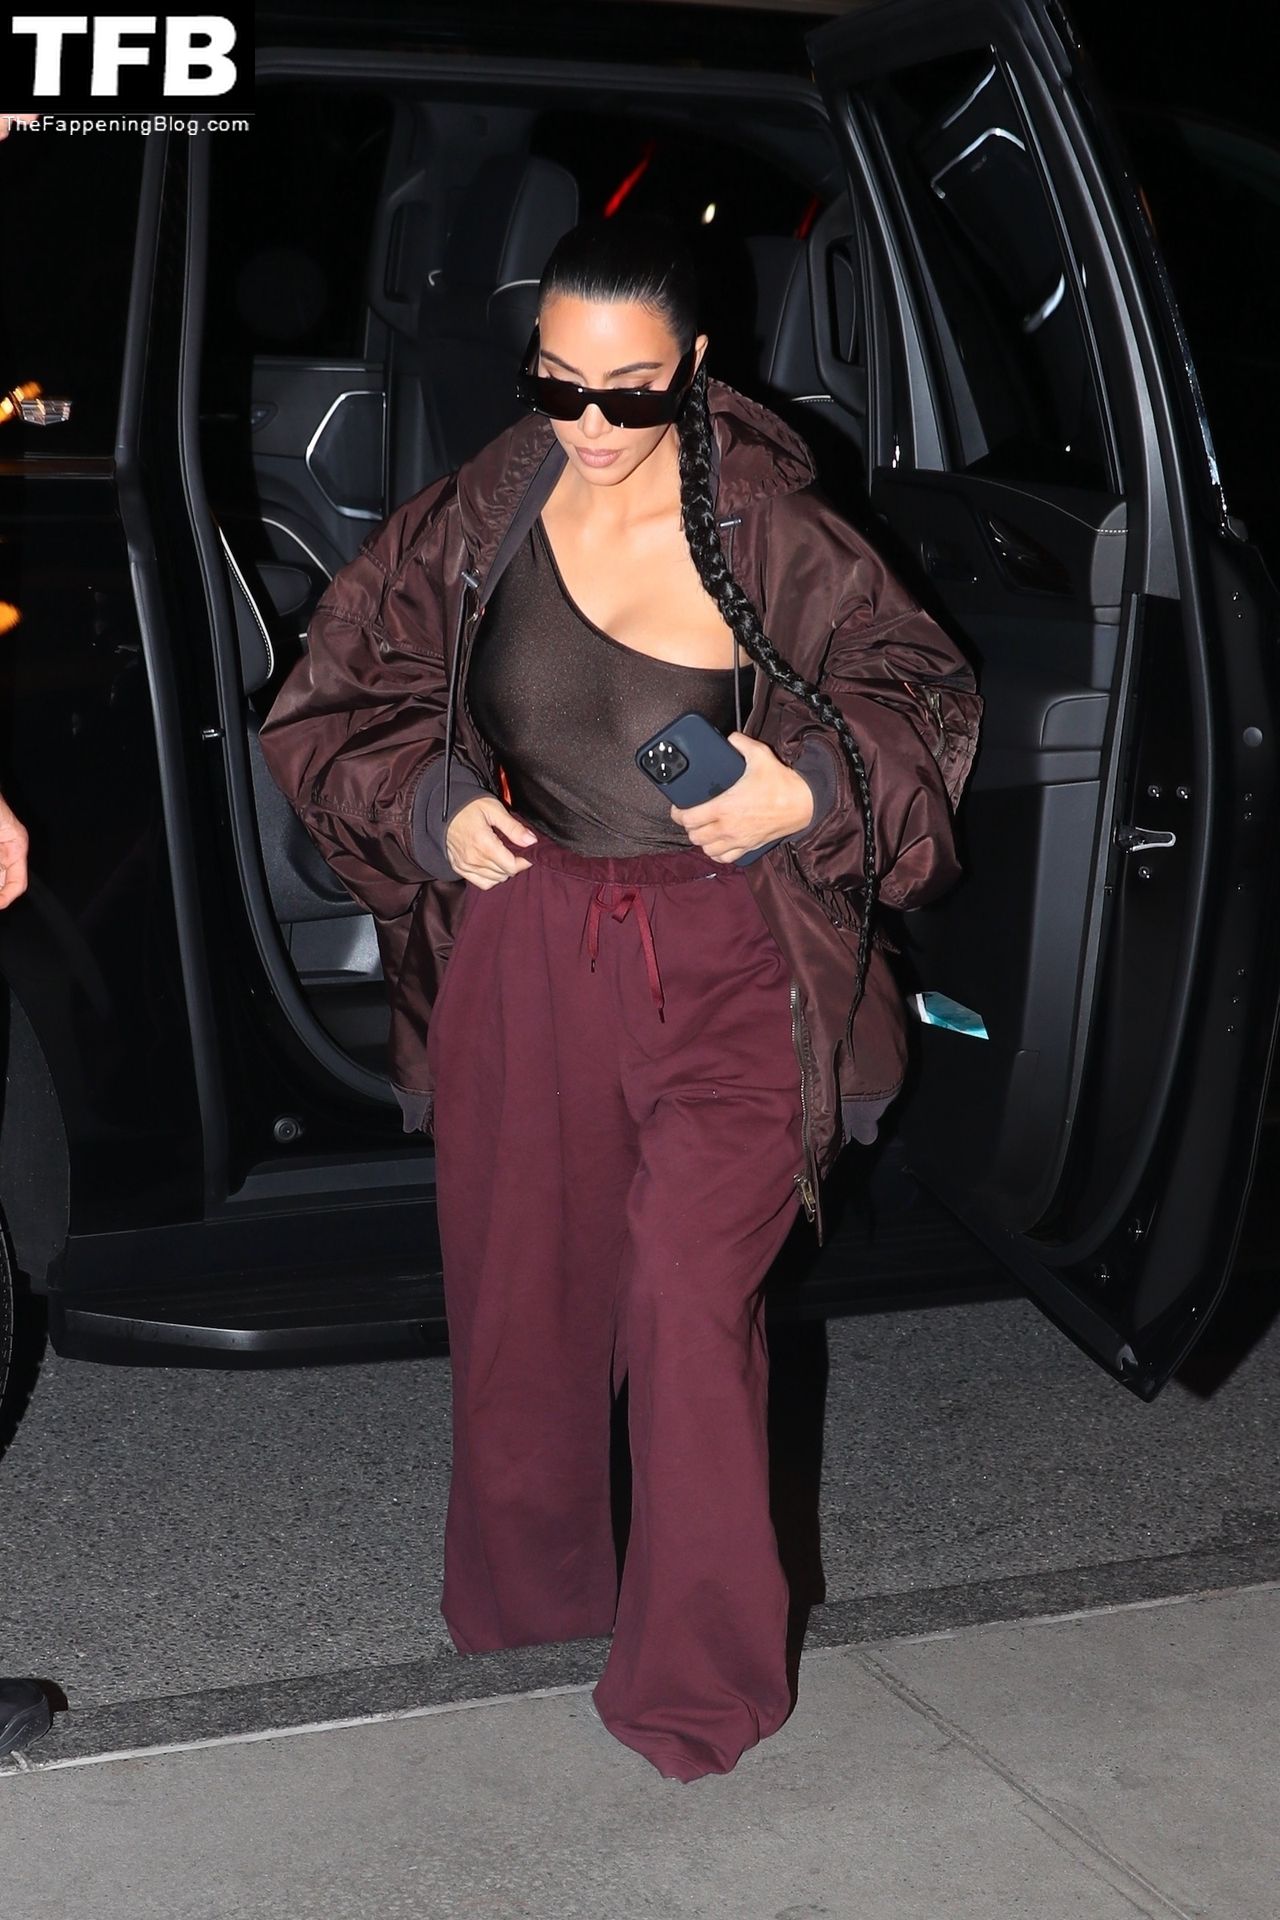 Kim-Kardashian-Sexy-Tits-The-Fappening-Blog-13.jpg